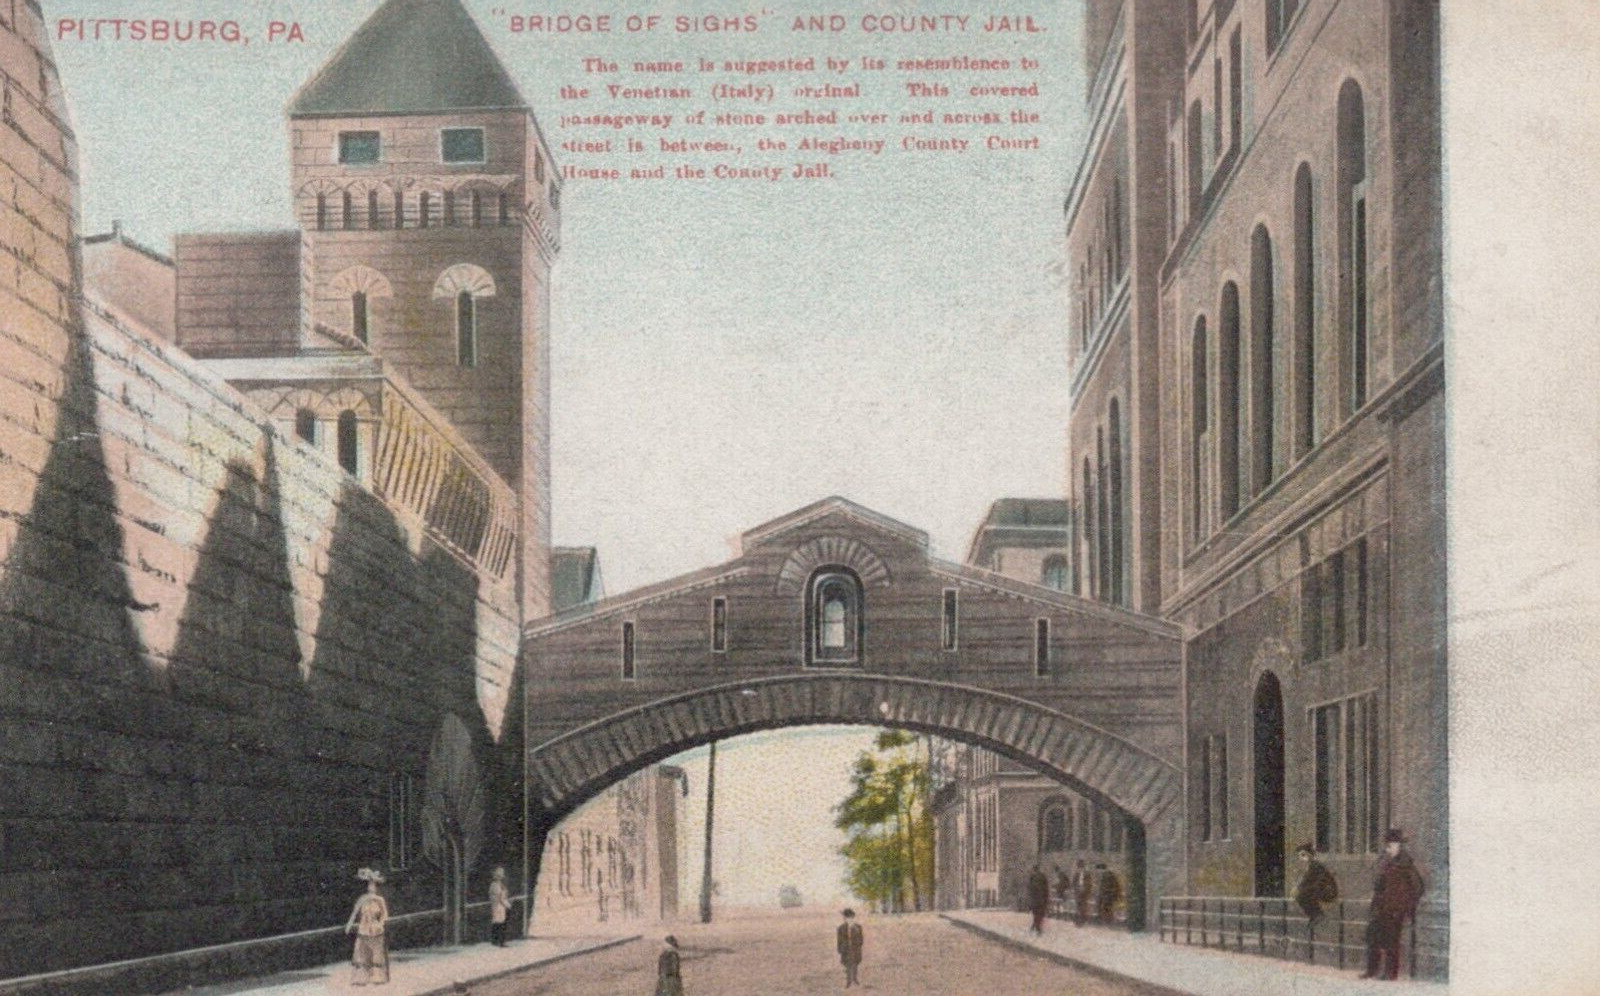 Bridge of Sorrows and County Jail - Pittsburg PA